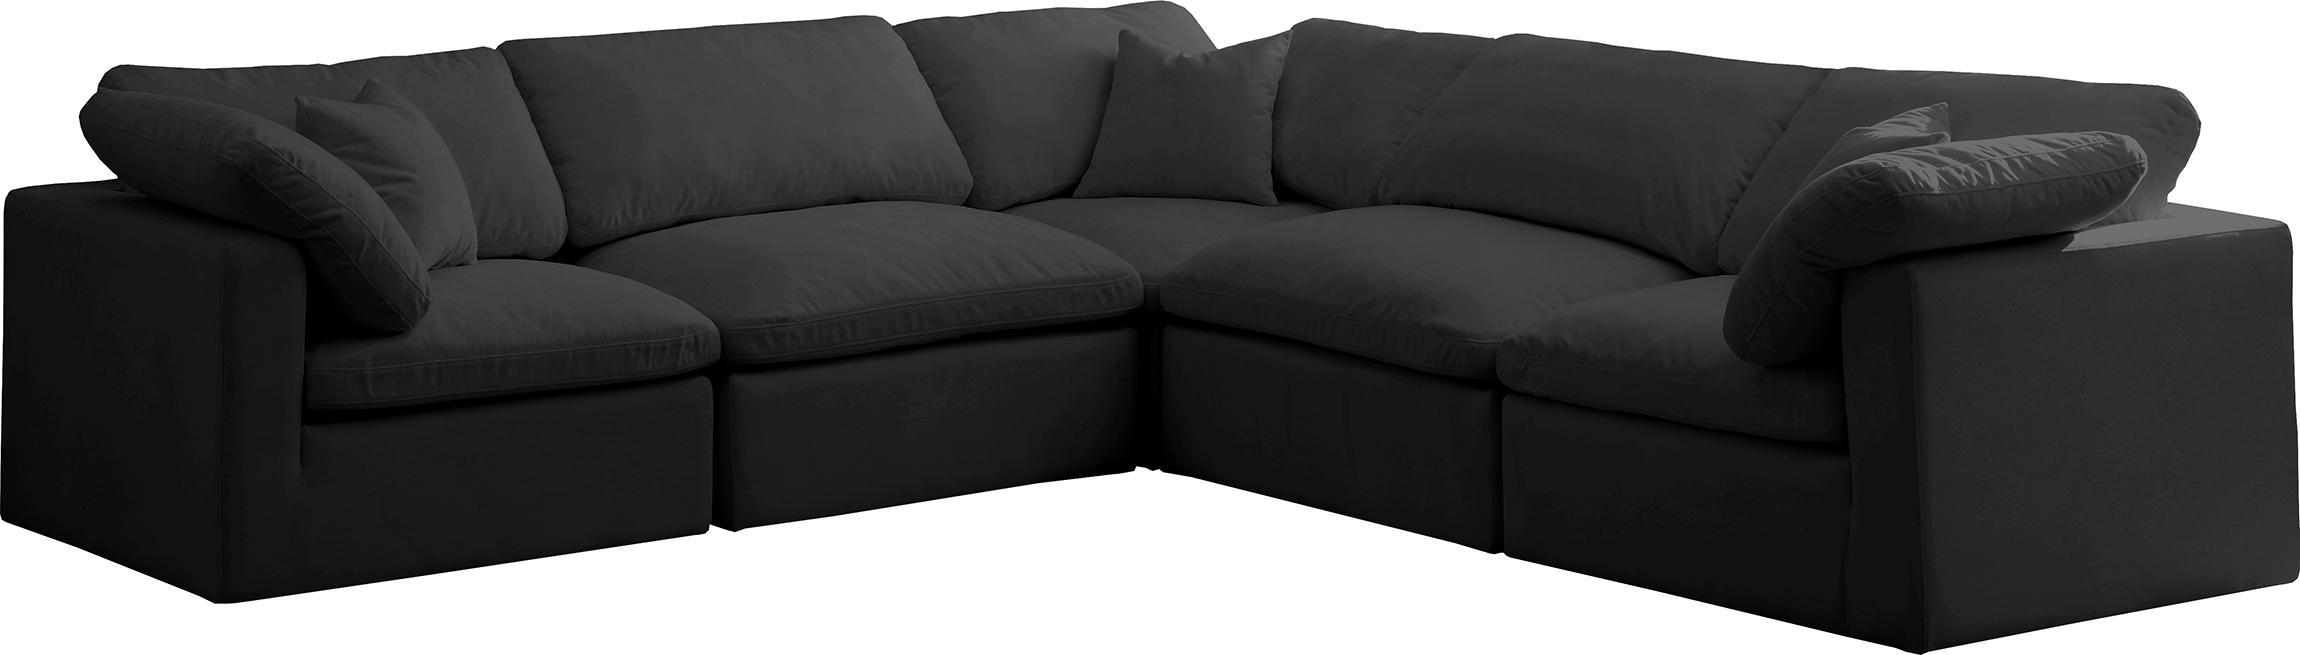 Contemporary, Modern Modular Sectional Sofa 602Black-Sec5C 602Black-Sec5C in Black Fabric